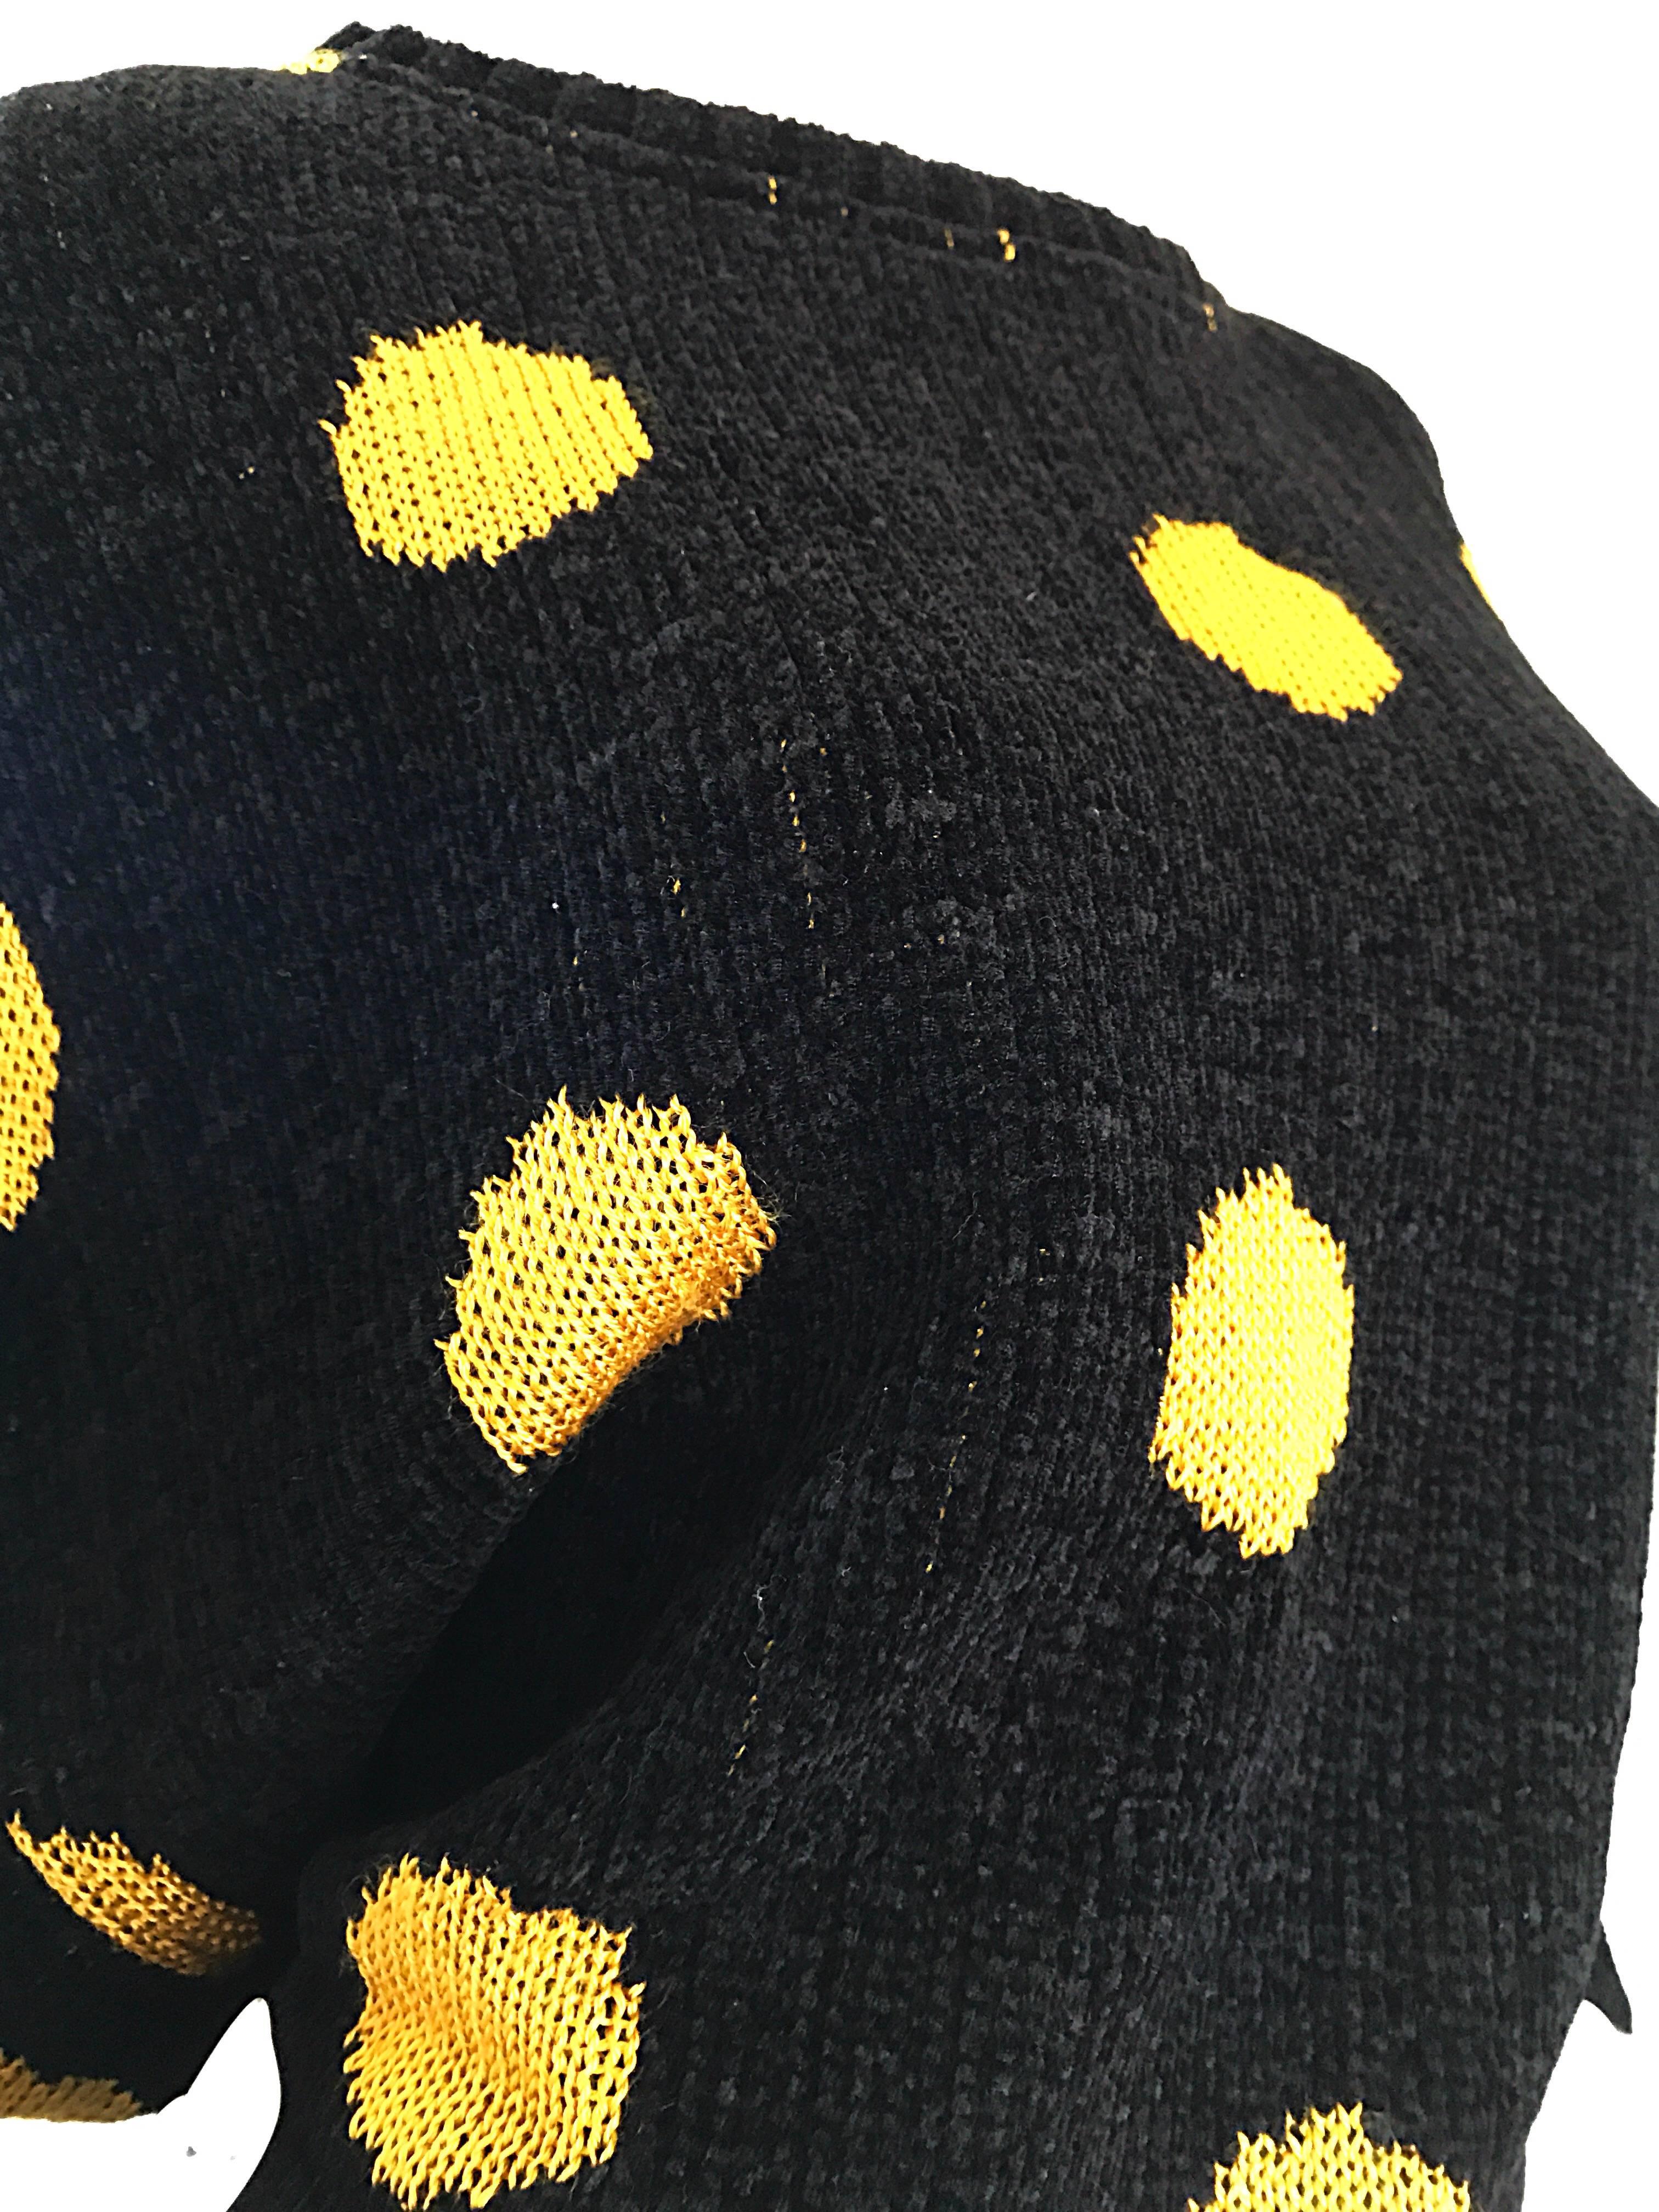 Women's Rare Vintage Gianni Versace Early 1980s Intarsia Black Yellow Polka Dot Sweater